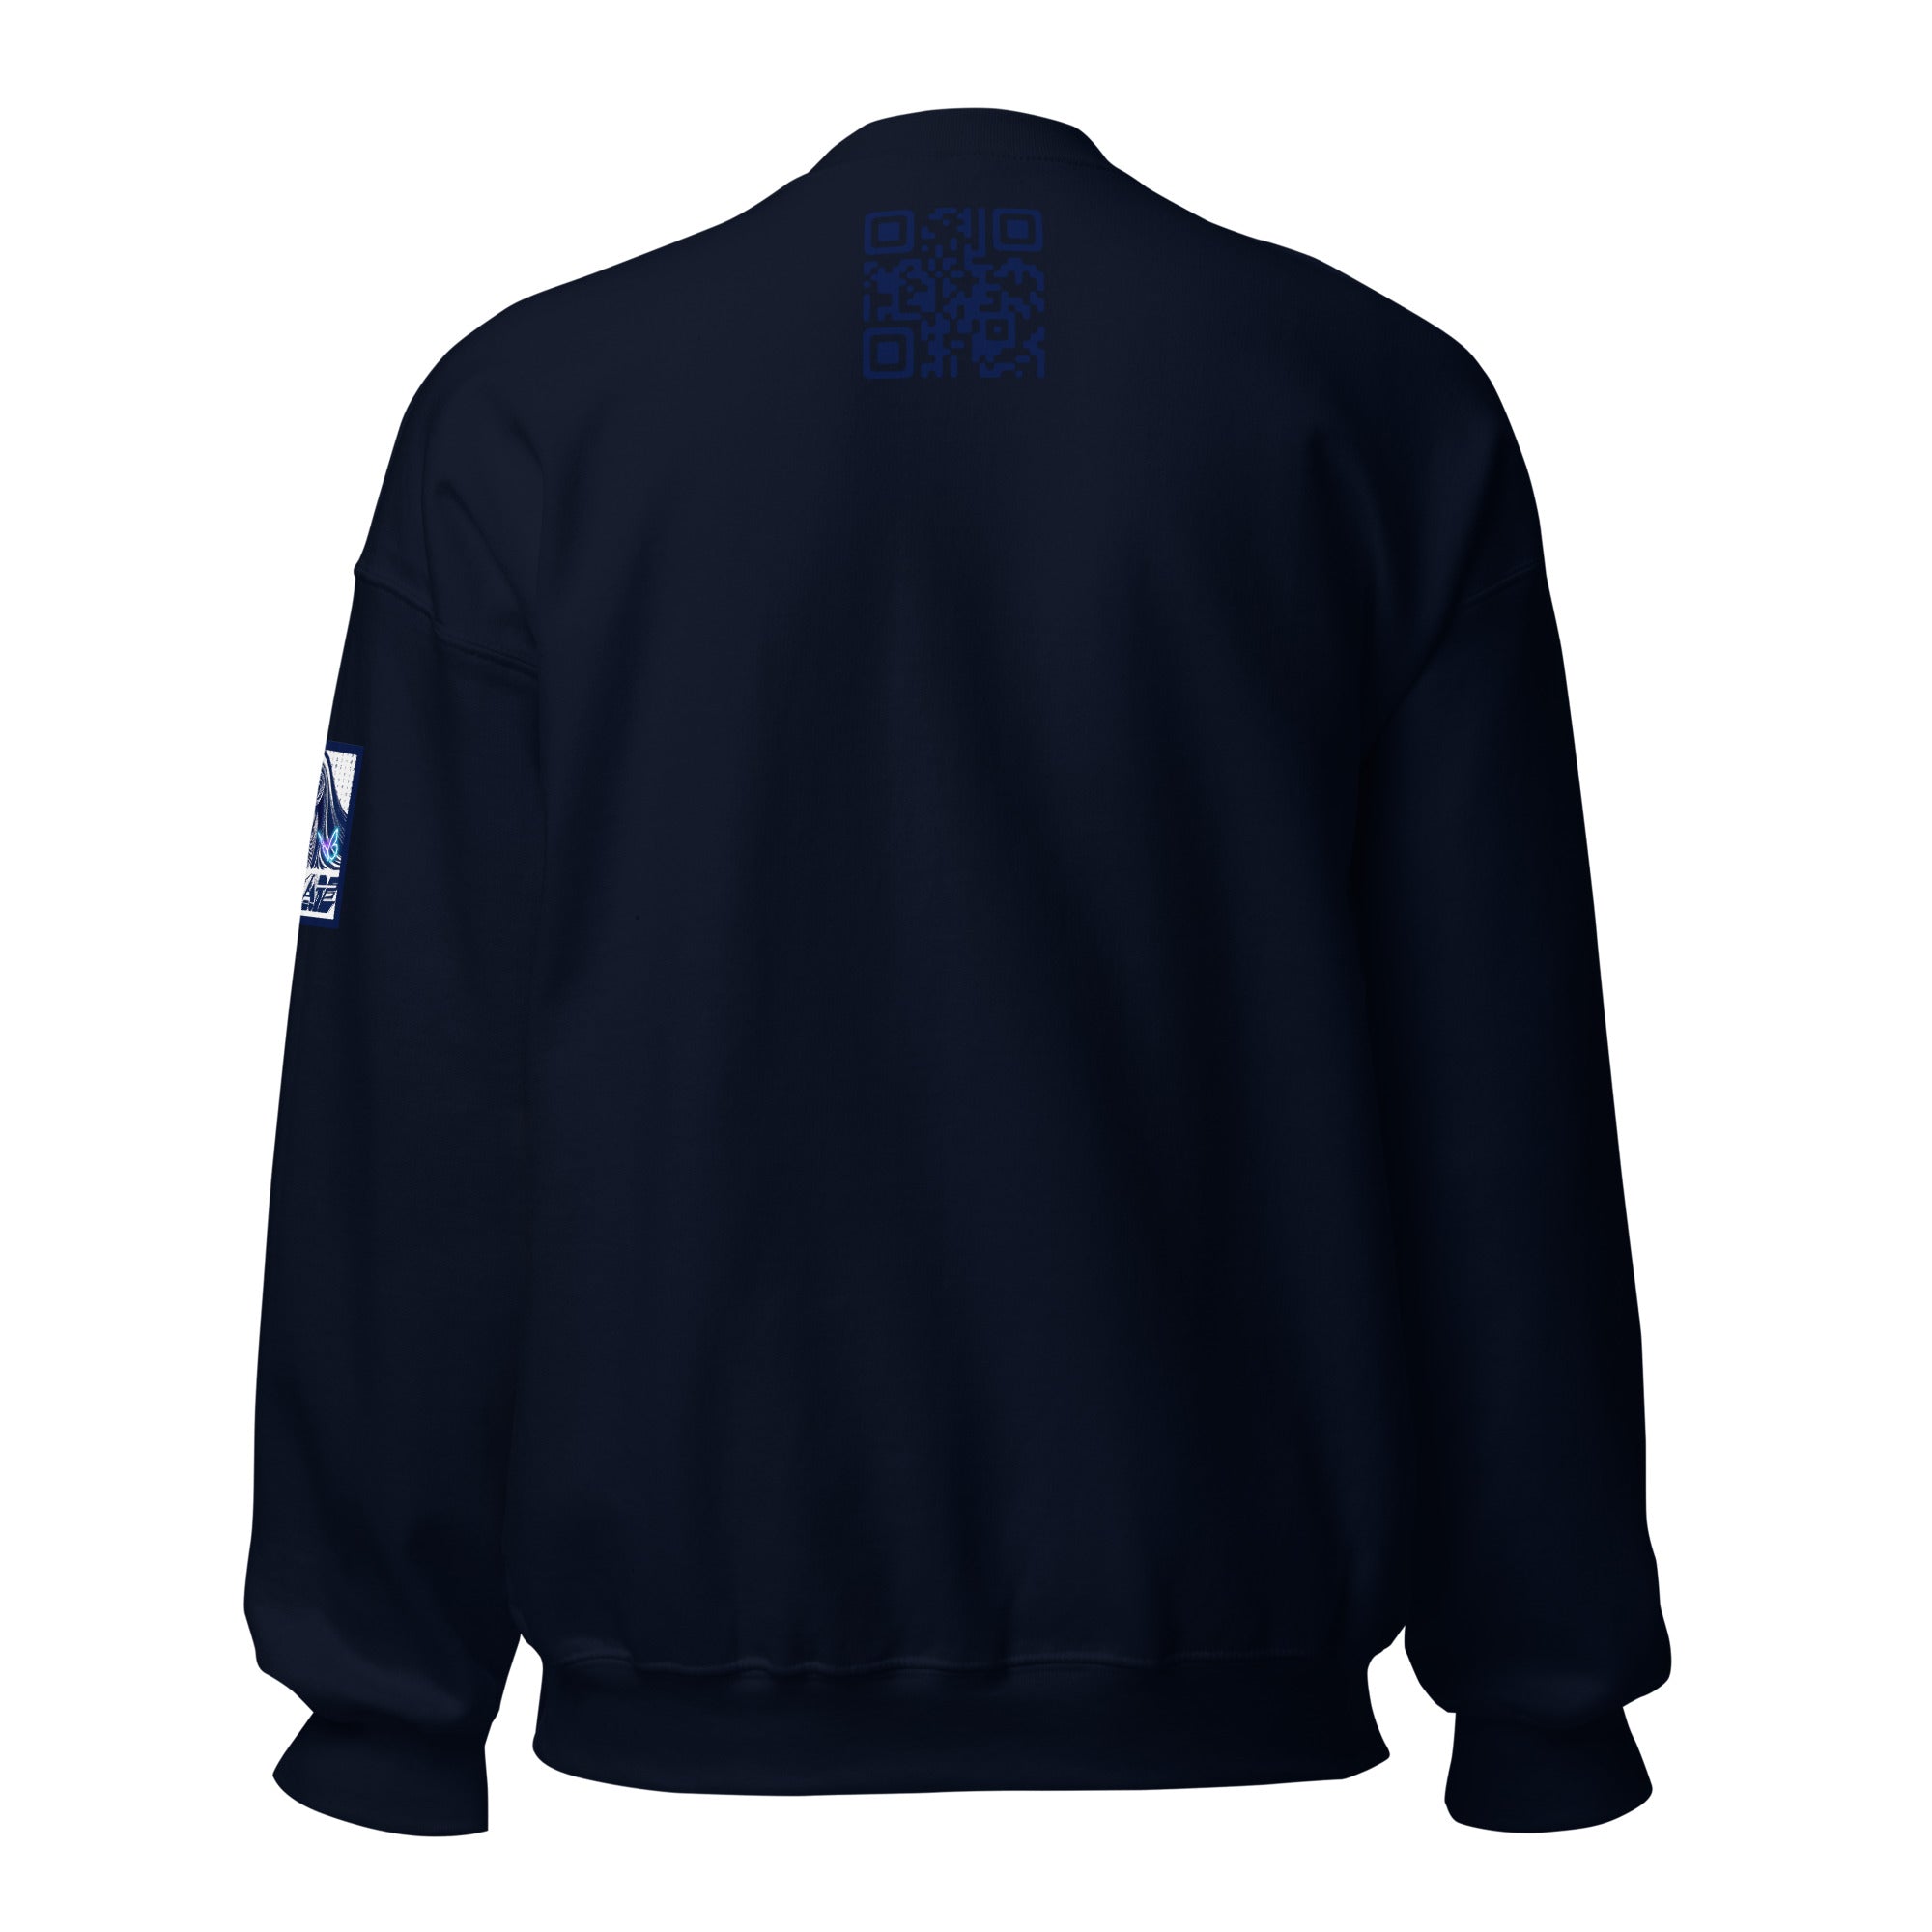 Unisex Crew Neck Sweatshirt - Artificial Intelligence Subject B258743 - GRAPHIC T-SHIRTS